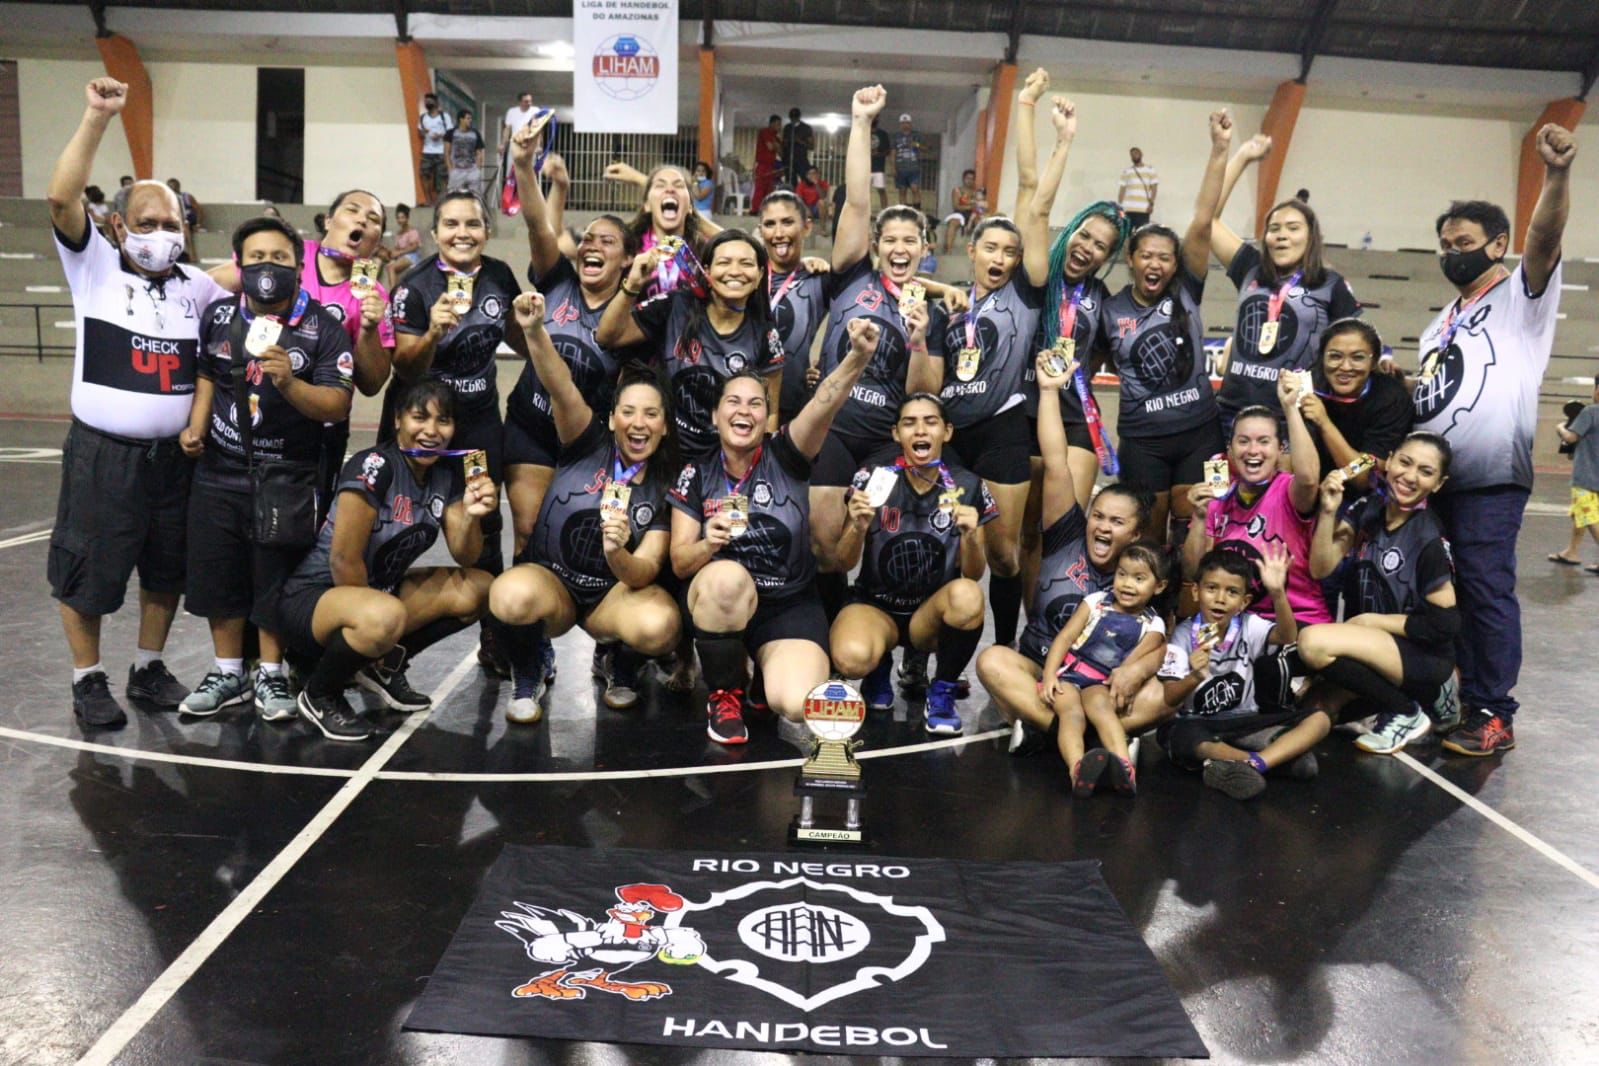 Rio Negro conquista o tricampeonato da Taça Laércio Miranda de Handebol feminino